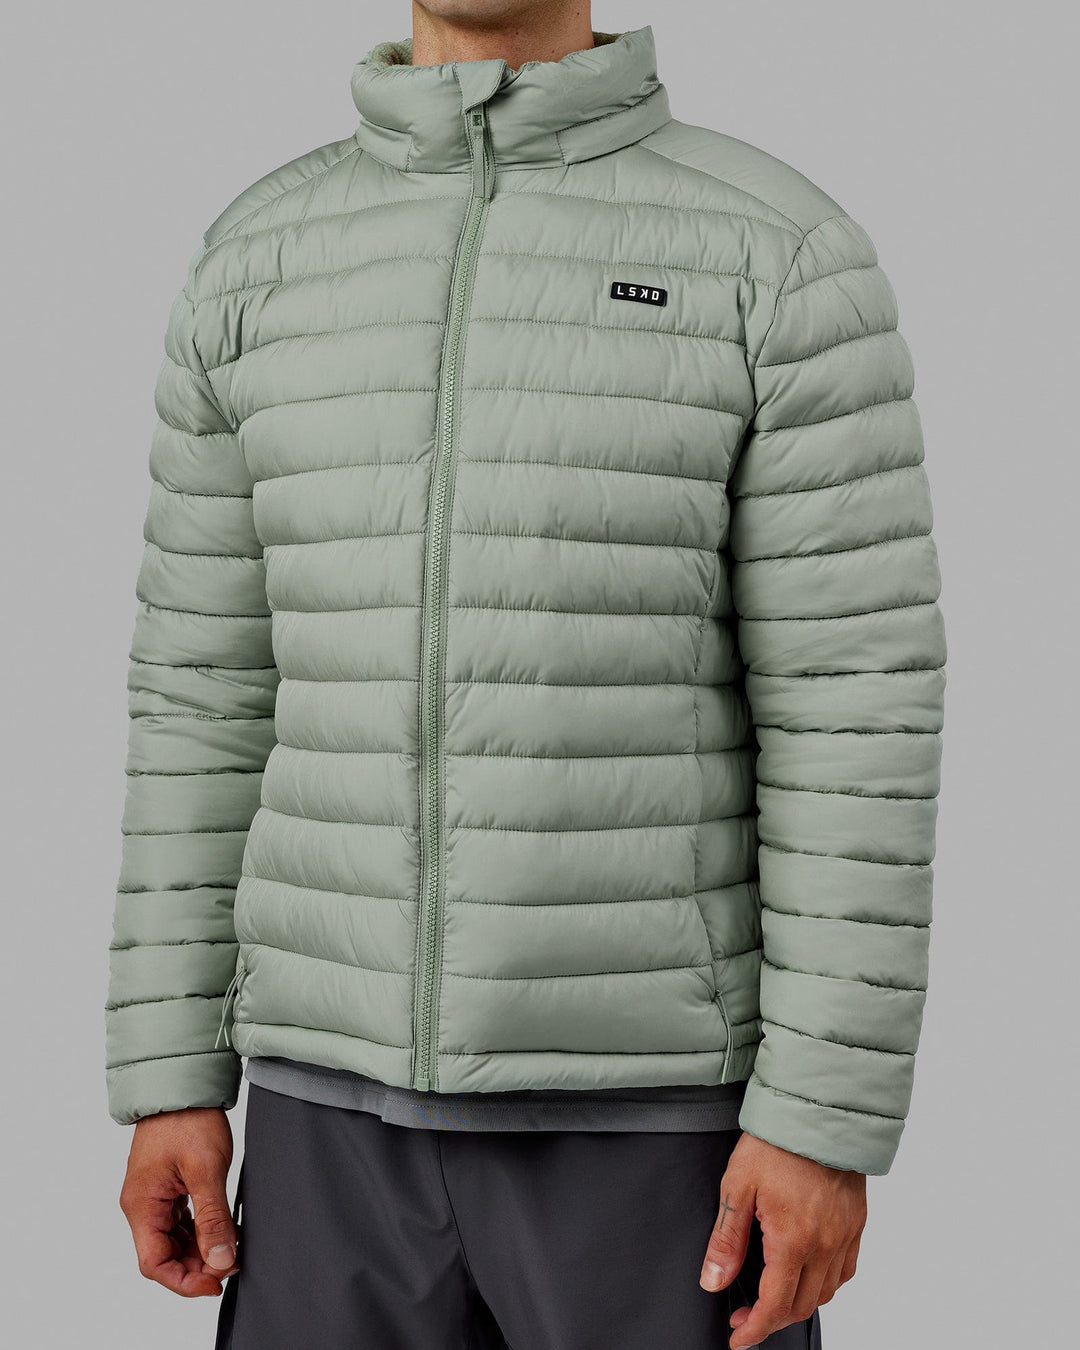 Man wearing All-day Puffer Jacket - Iceberg Green